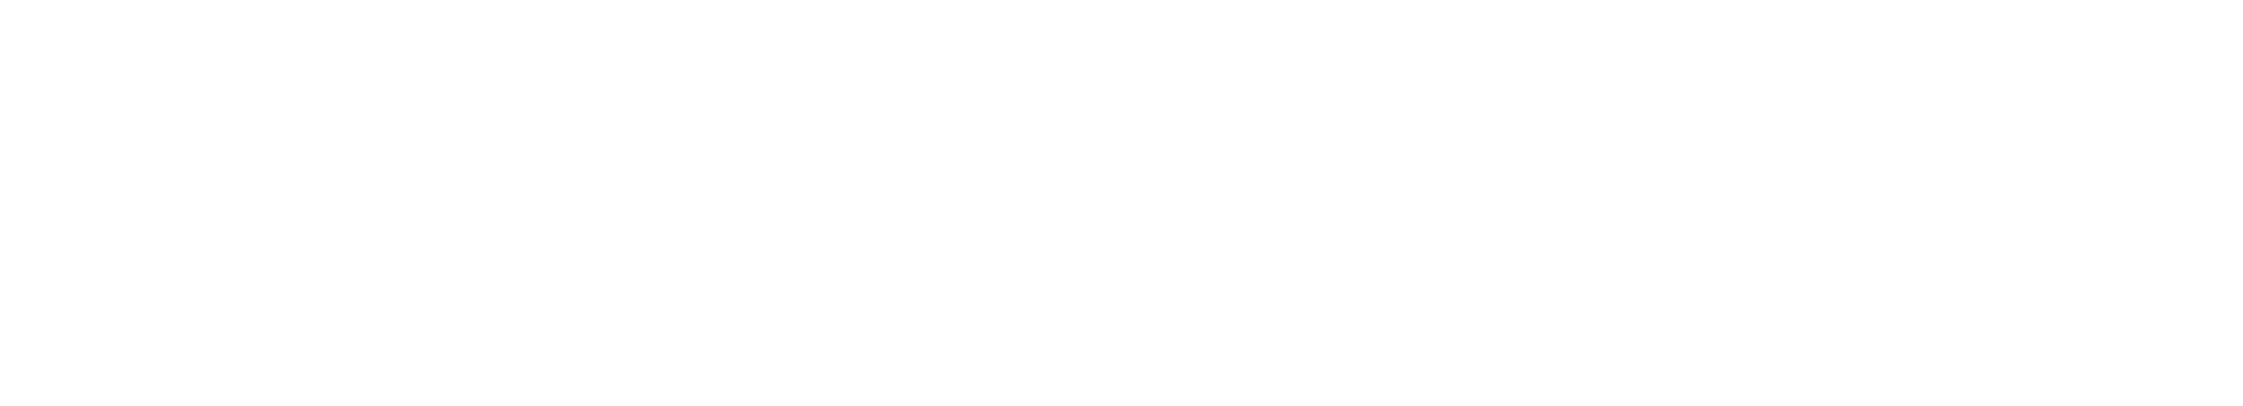 логотип гриль фактори